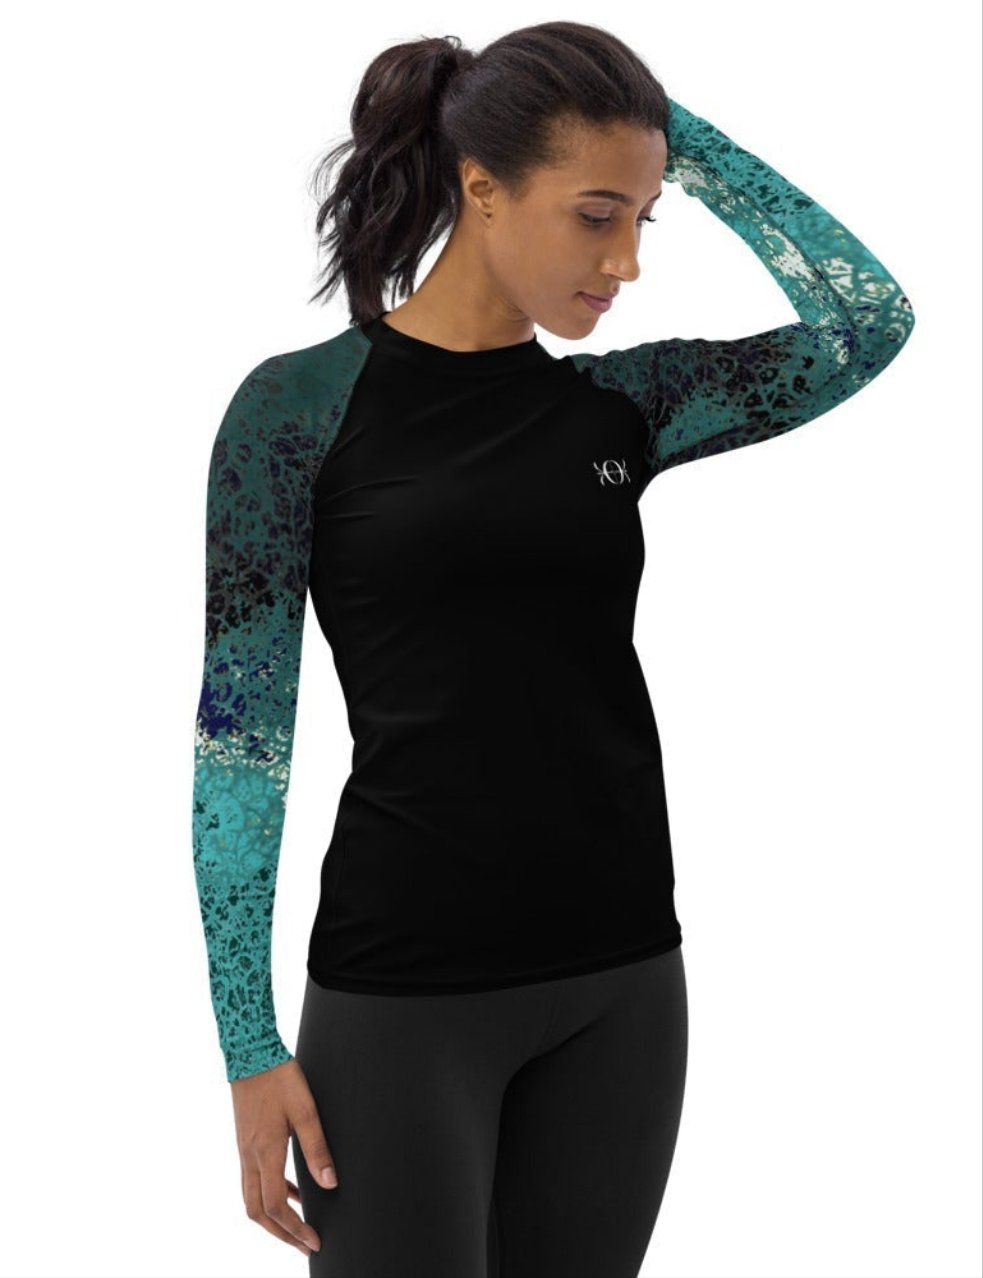 BJJ rash guard for women ocean wave print long sleeves - 3